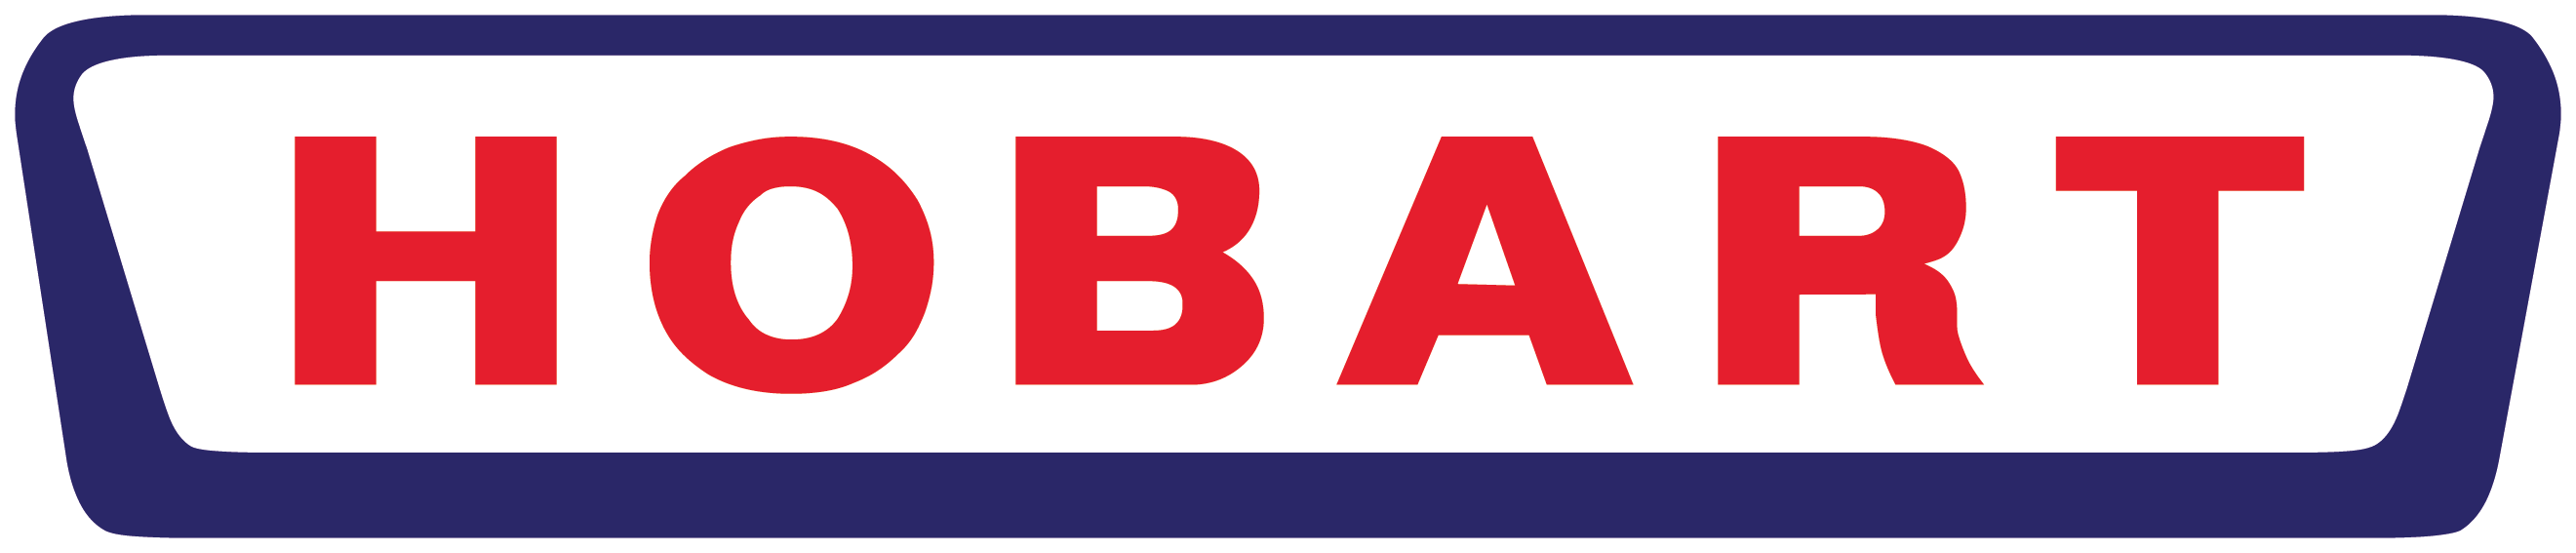 HOBART 2017 Logo 